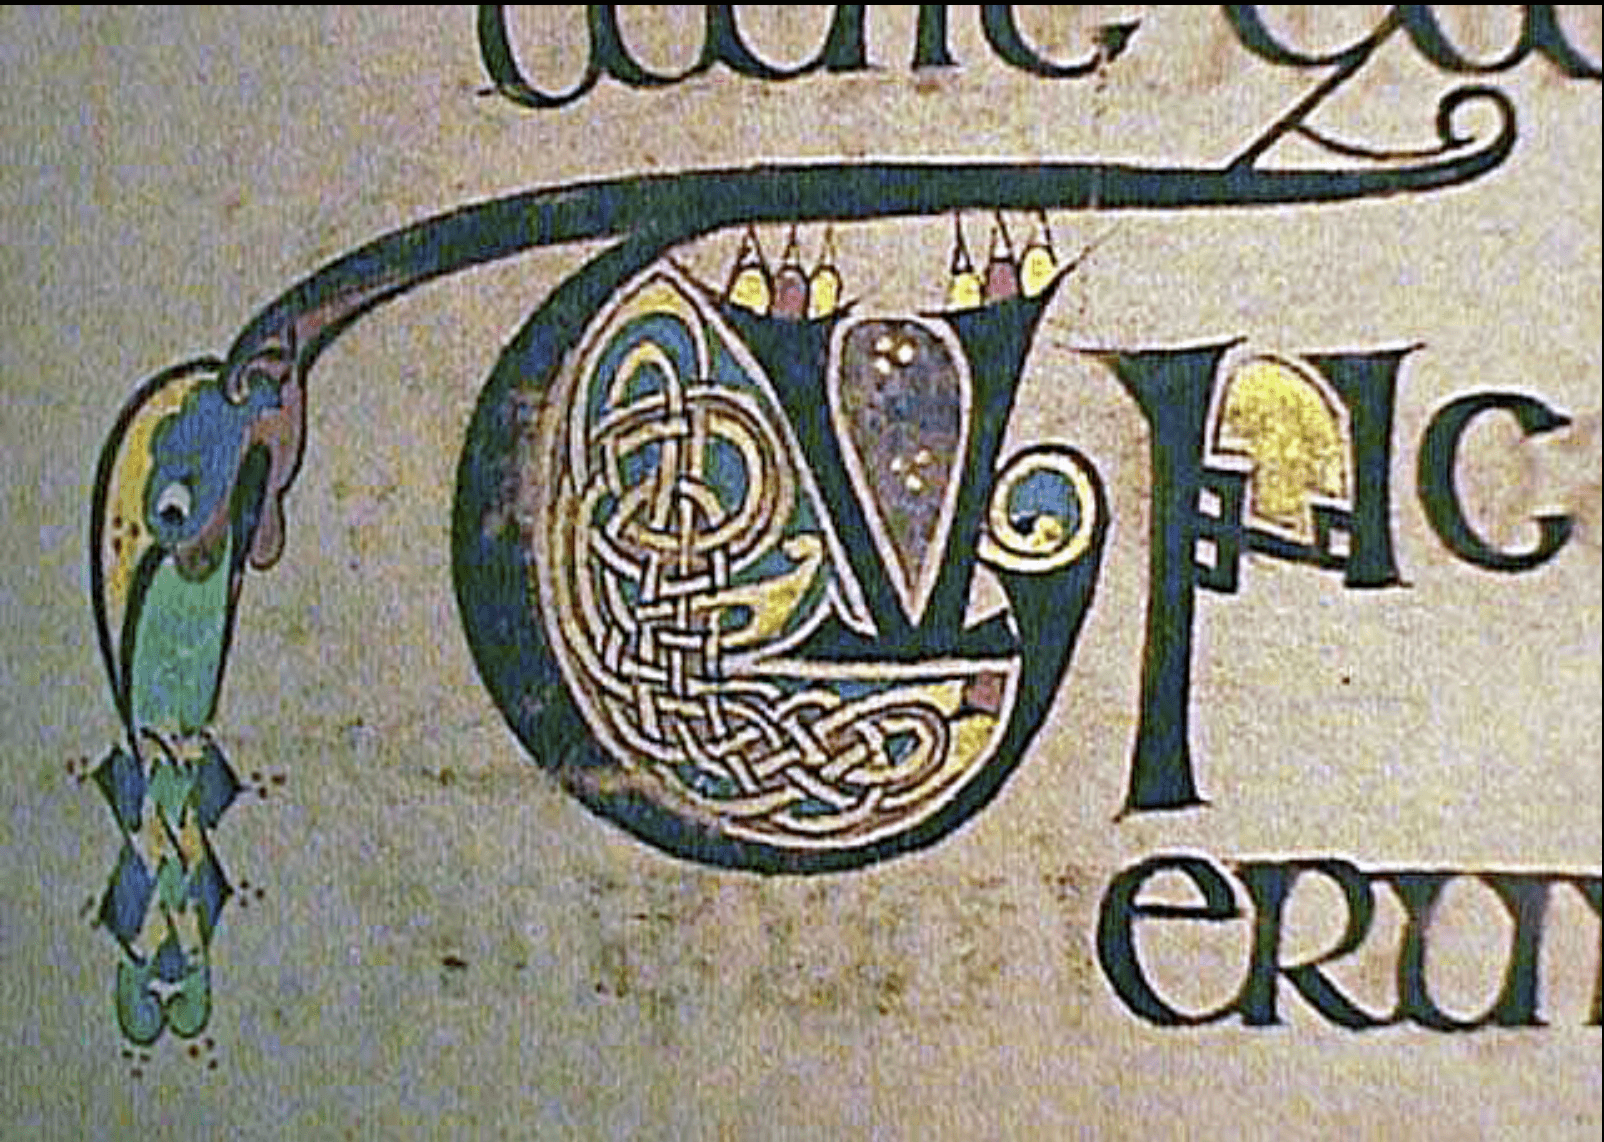 Creativity in an ancient illuminated manuscript